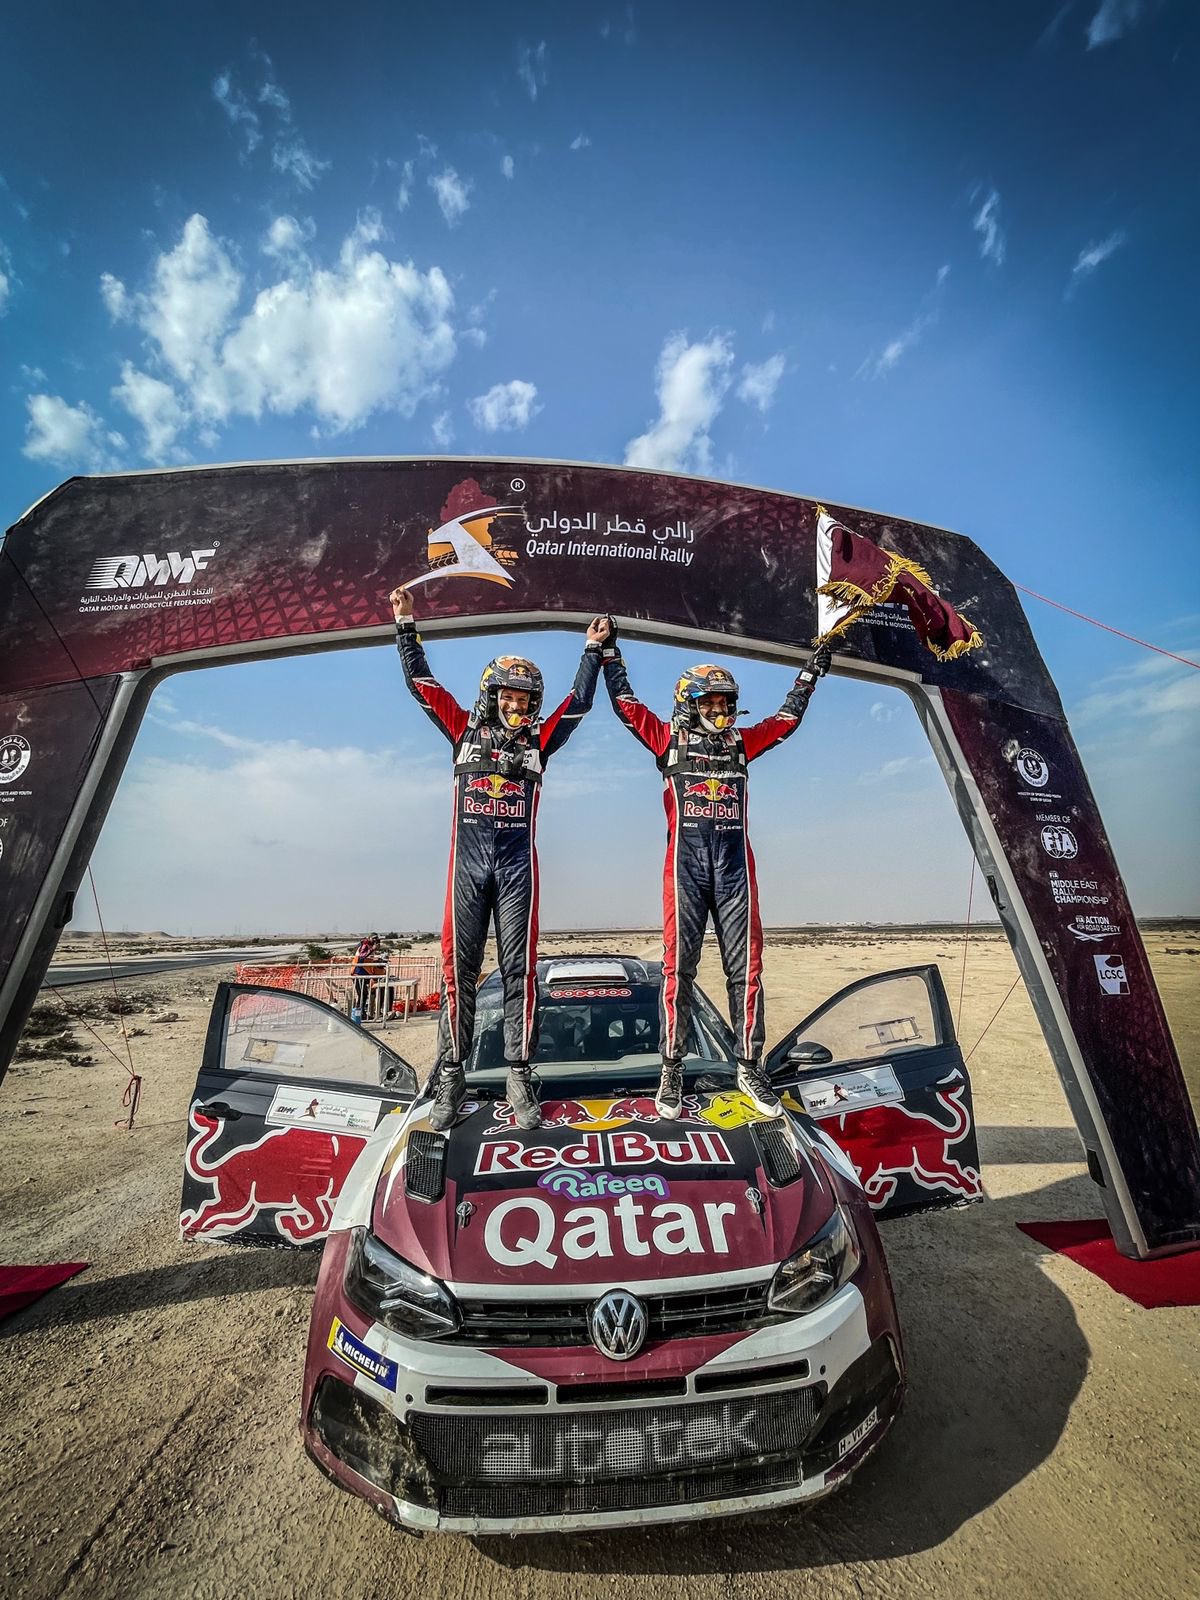 Detailed report: Al Attiyah Wins Title of Qatar International Rally